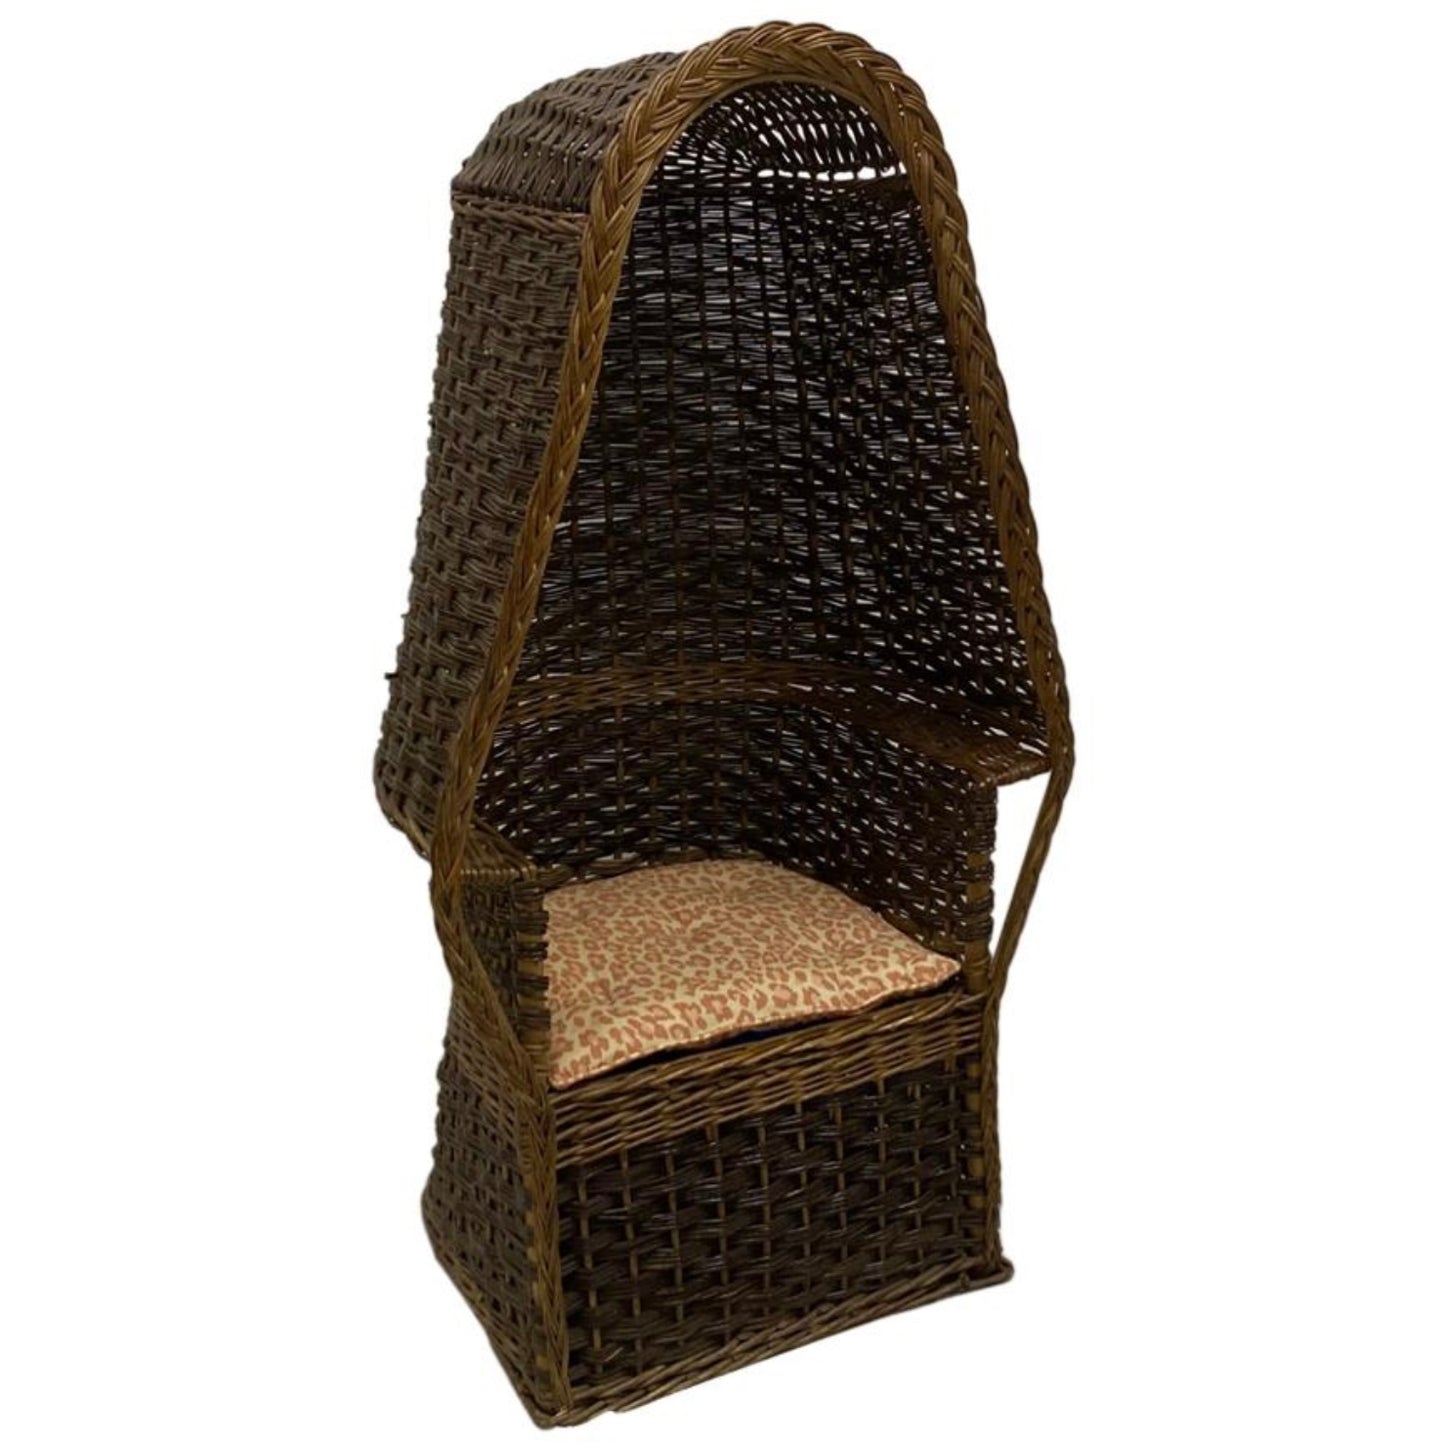 1930s Hand Woven Wicker Porter's Chair